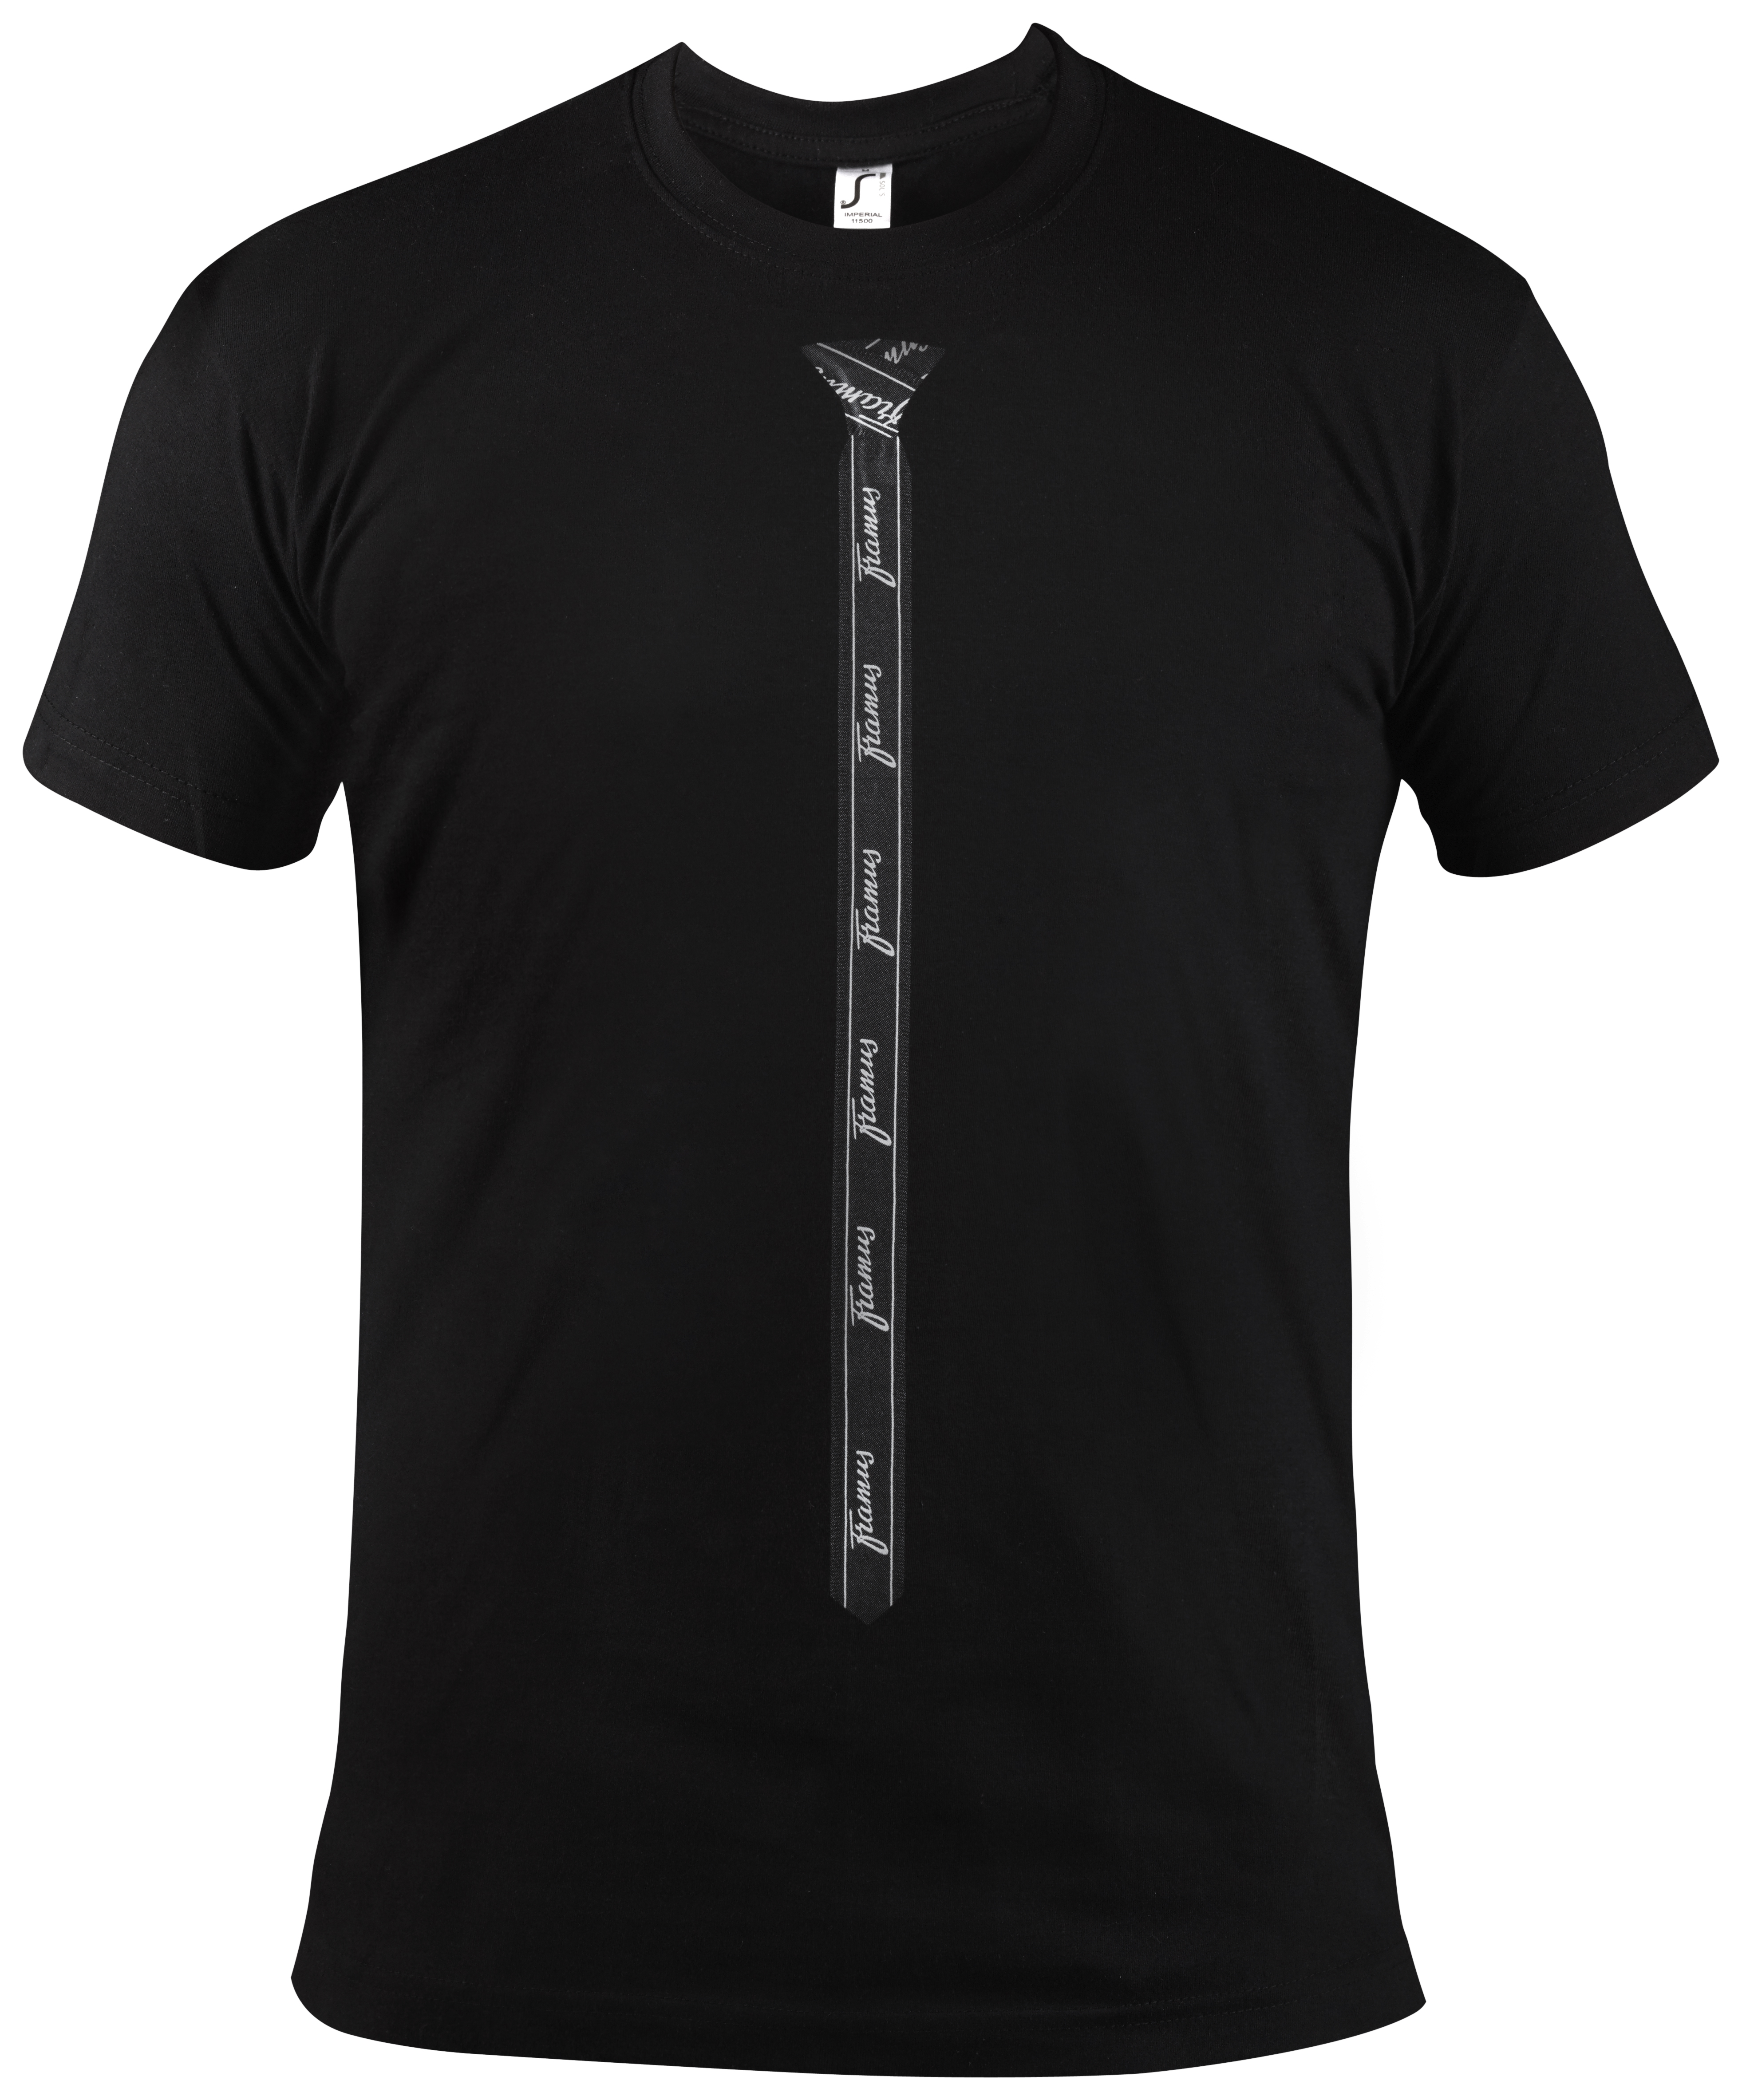 Framus Promo - Tie - T-Shirt - Female / Size L